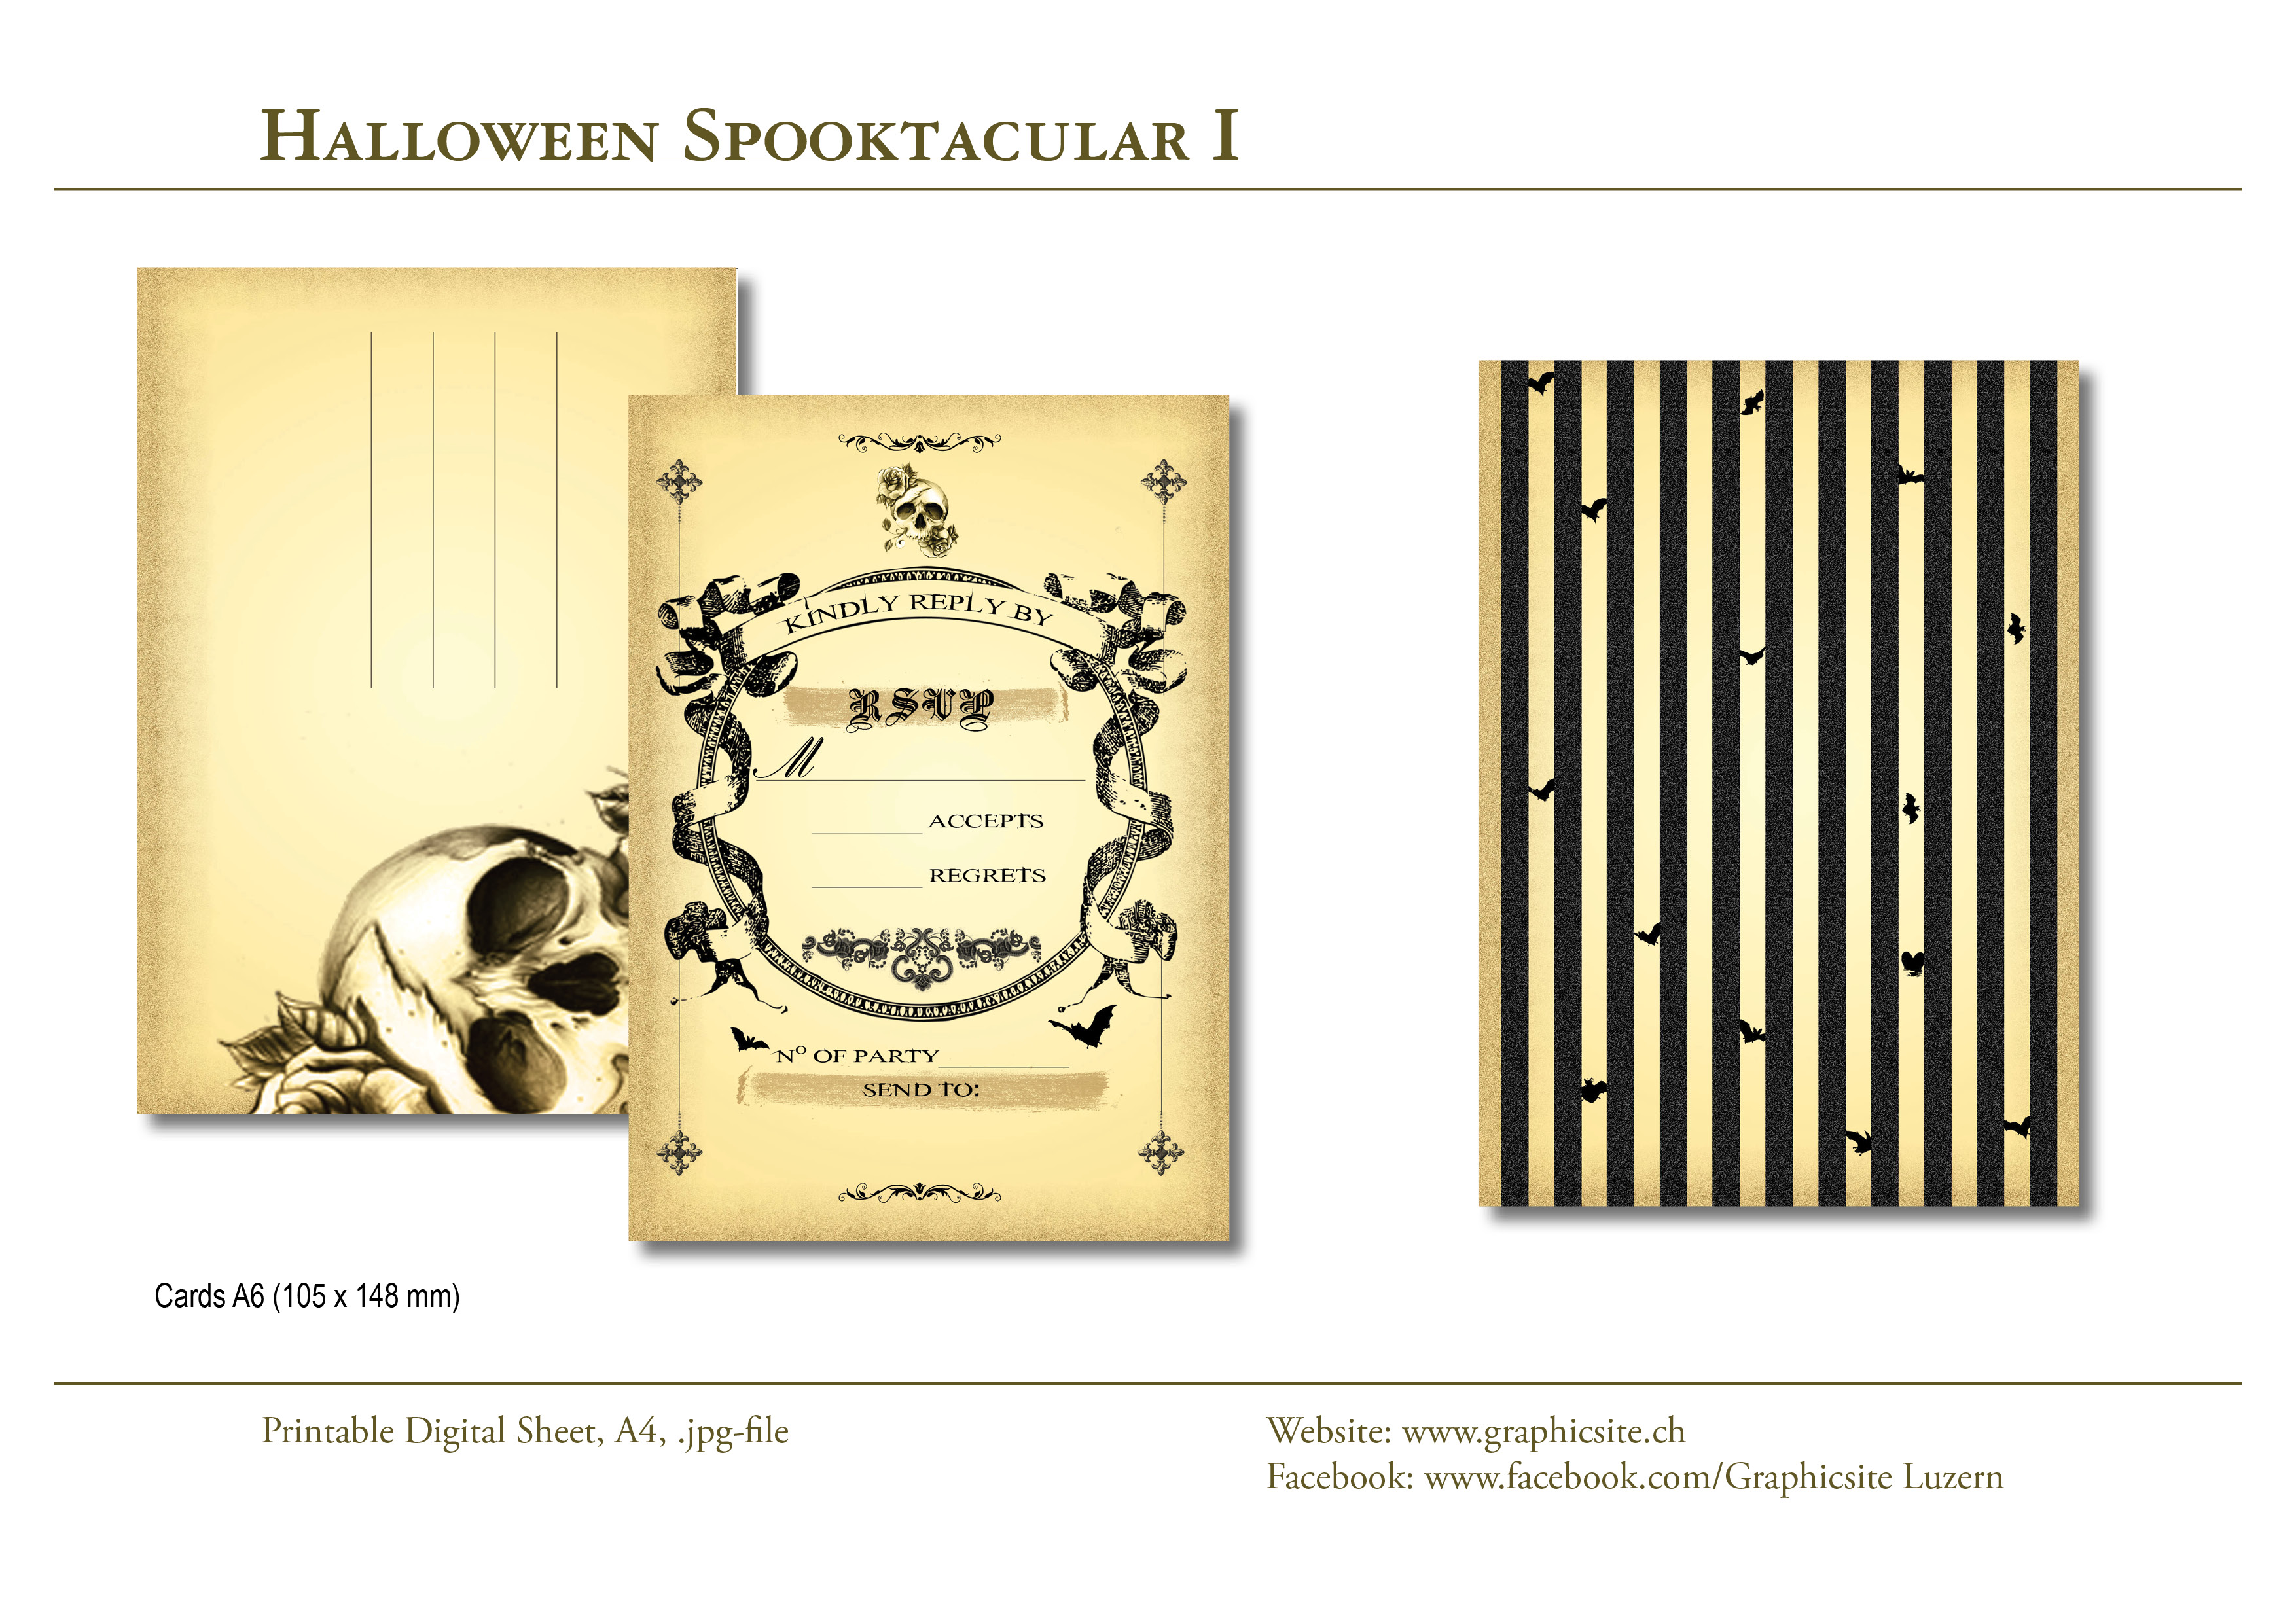 Printable Digital Sheets - DIN A-Cards - Halloween 1